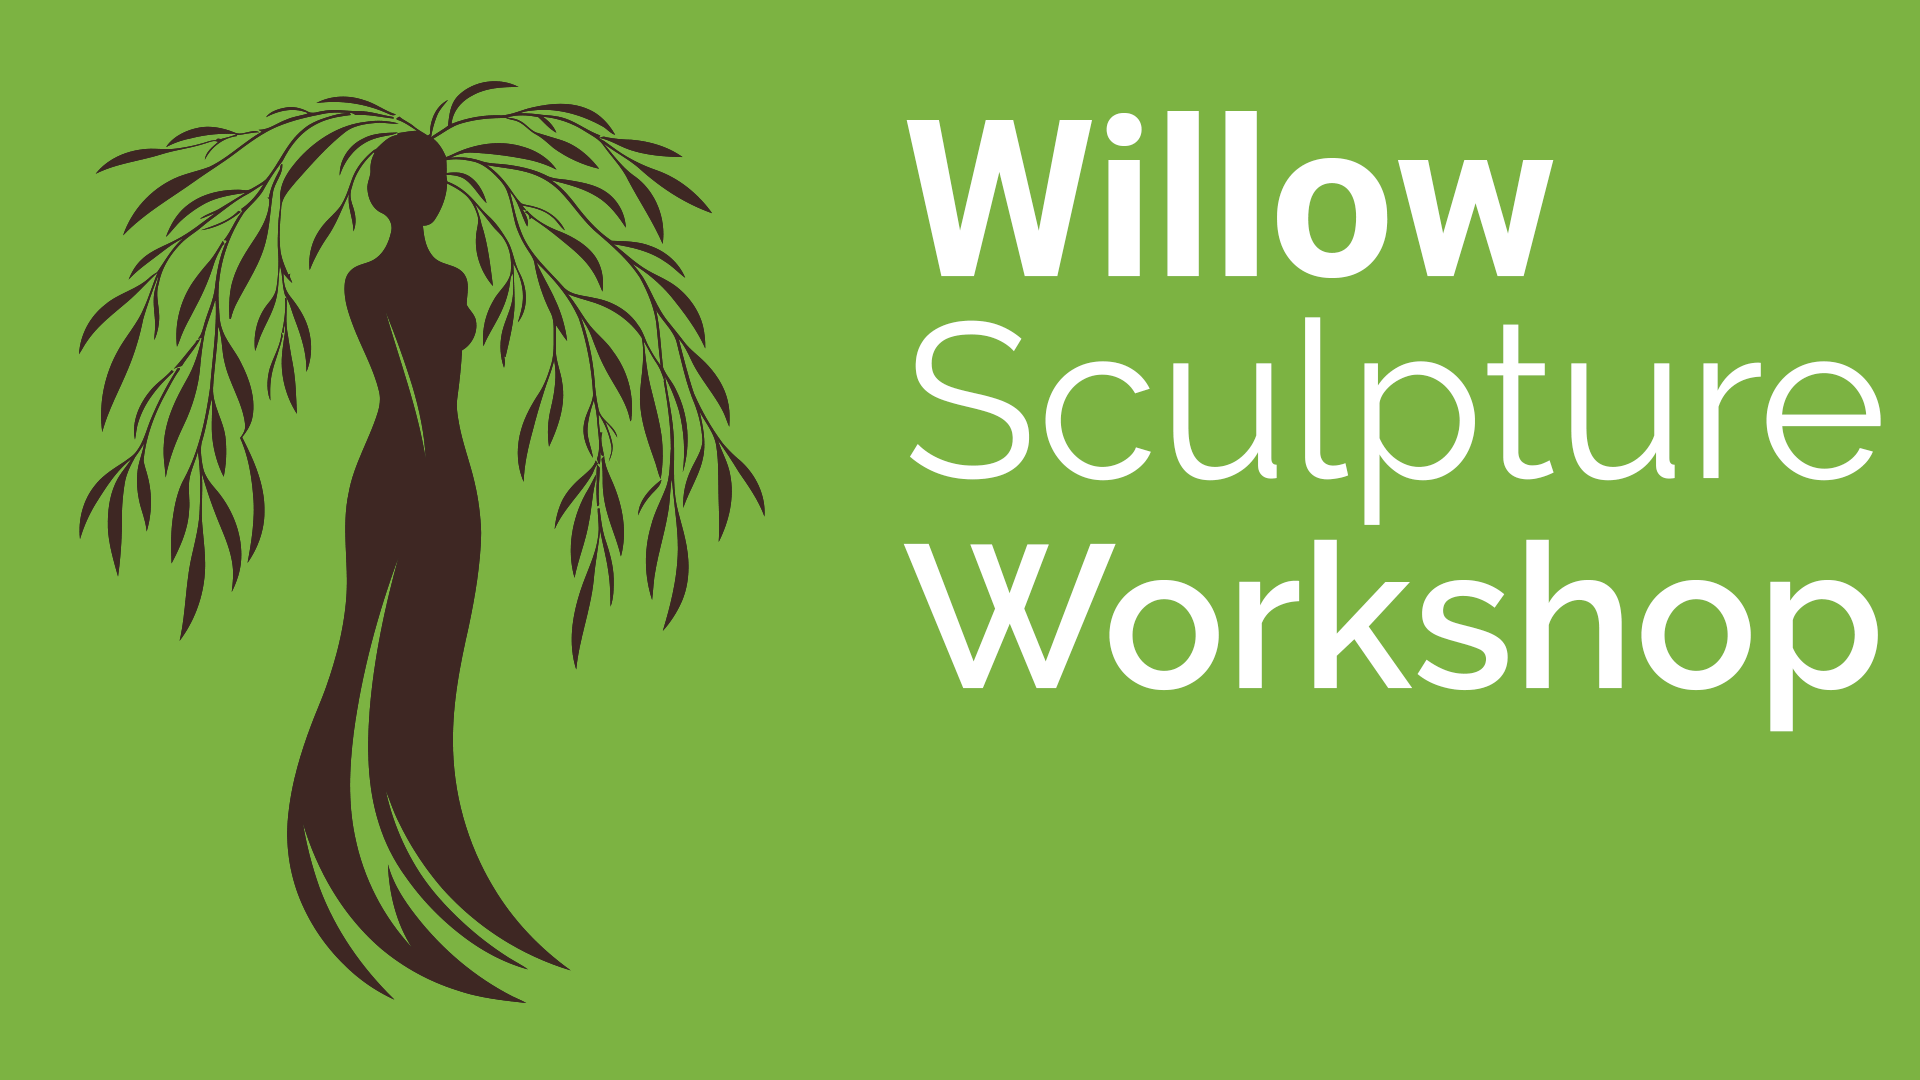 Willow Sculpture workshop